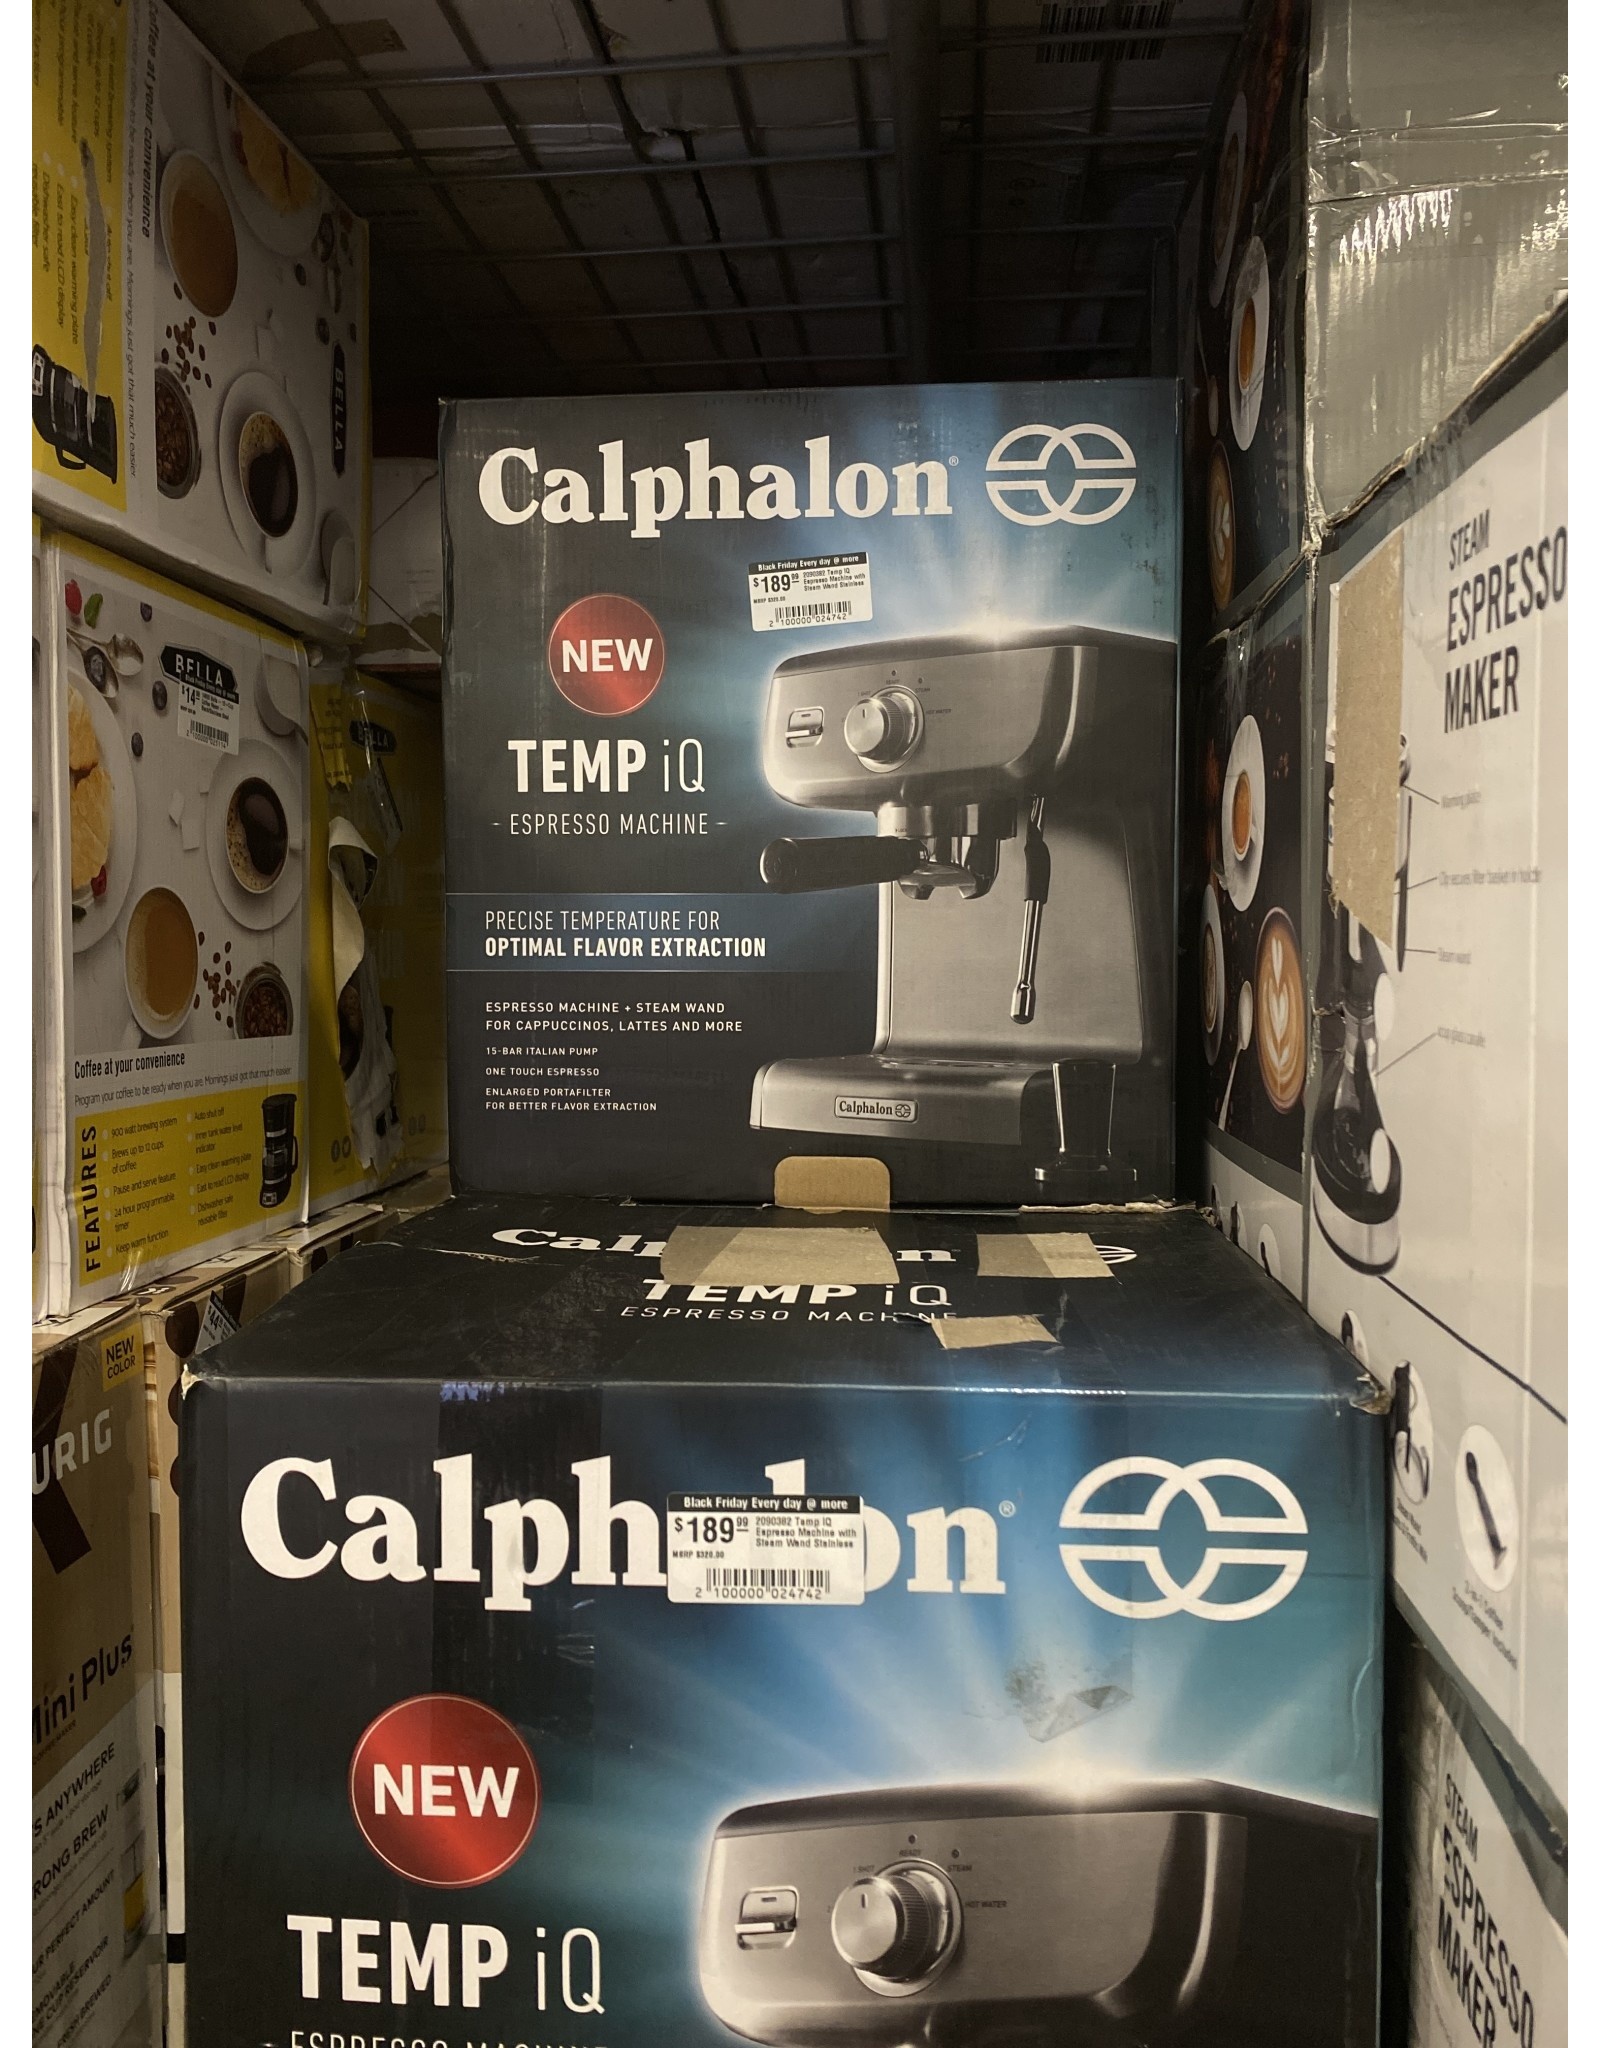 Calphalon 2090382 Temp IQ Espresso Machine with Steam Wand Stainless